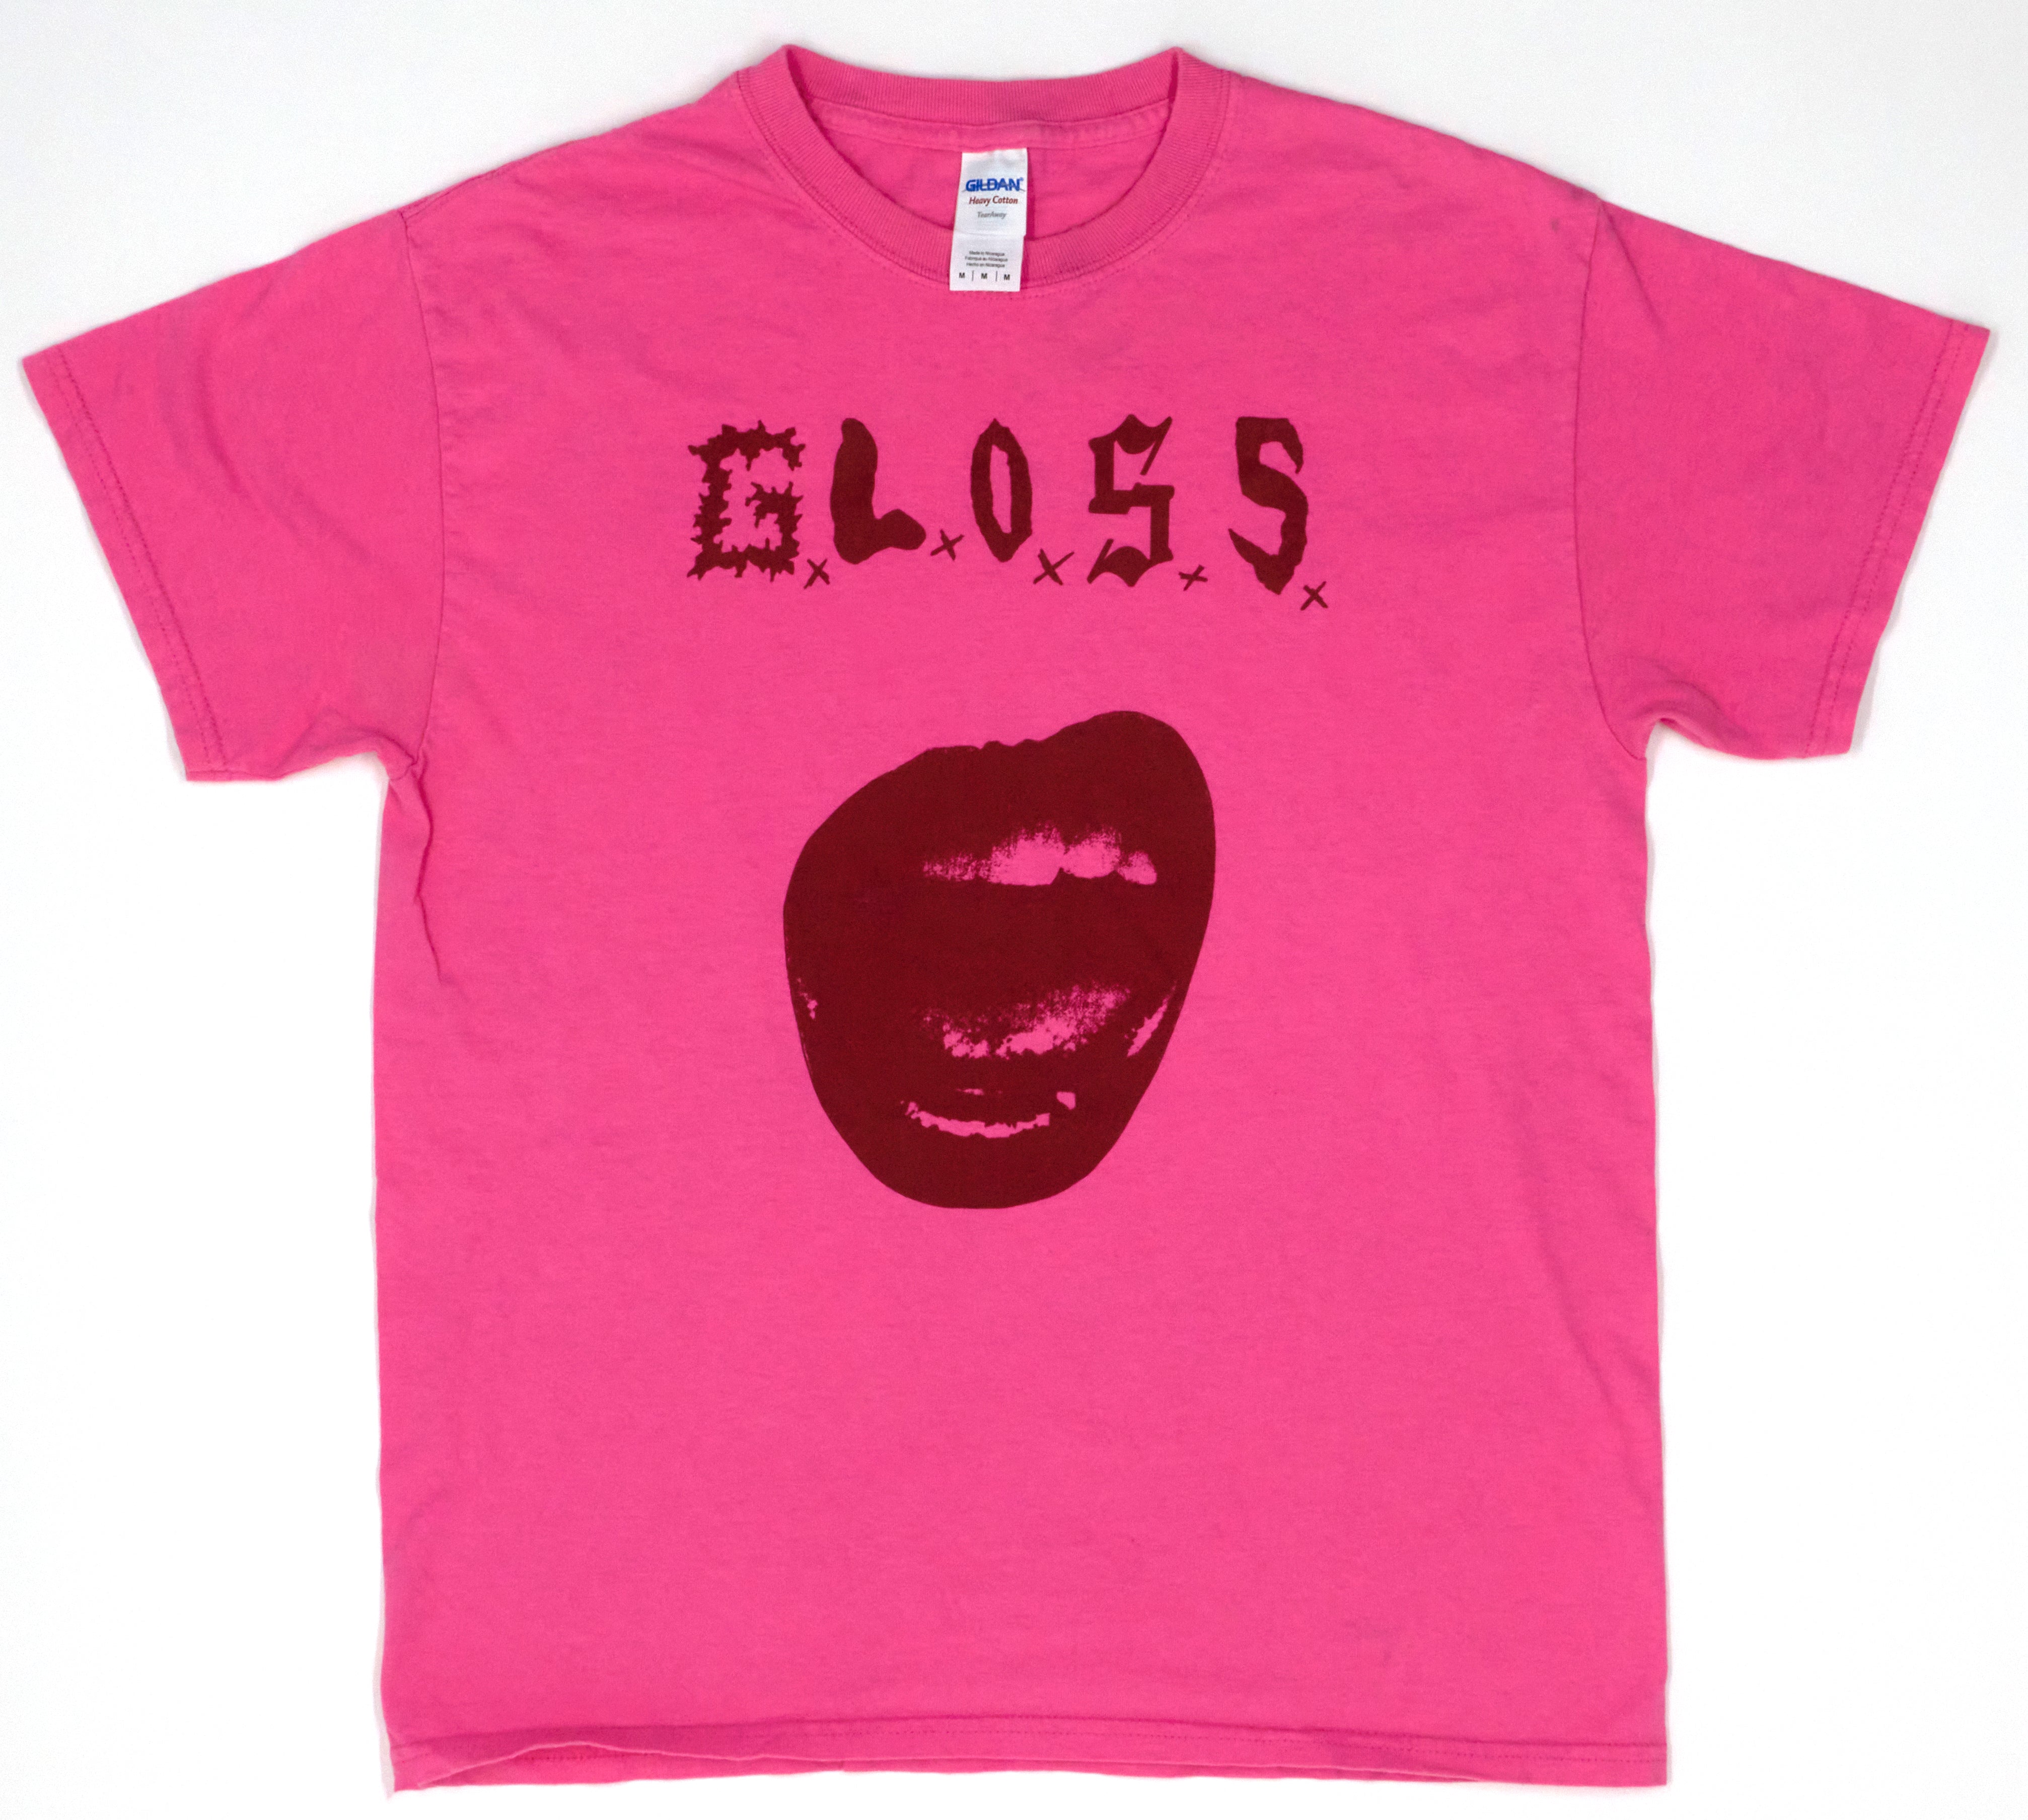 G.L.O.S.S. – Girls Living Outside Society's Shit 2015 Tour Shirt Size Medium